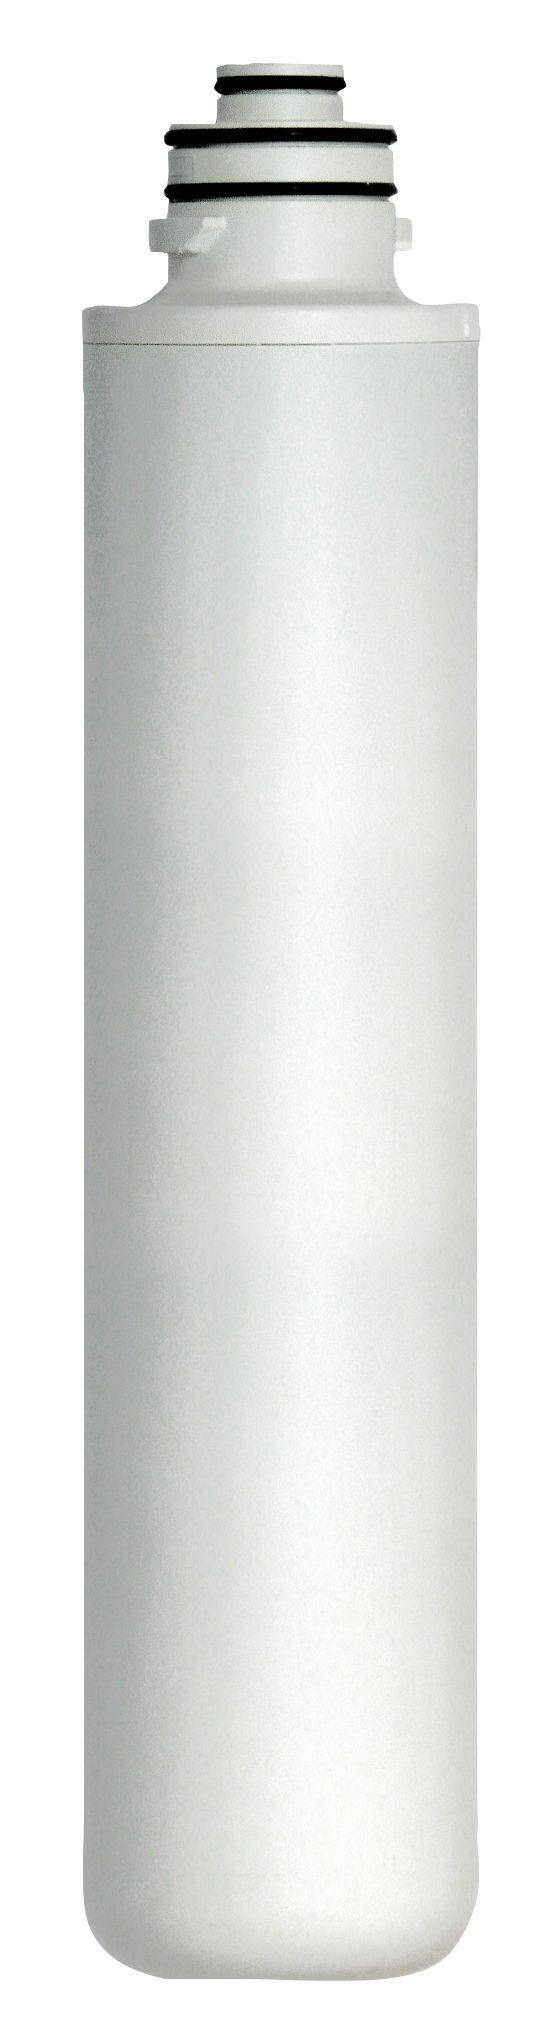 BWT Replacement water filter cartridge